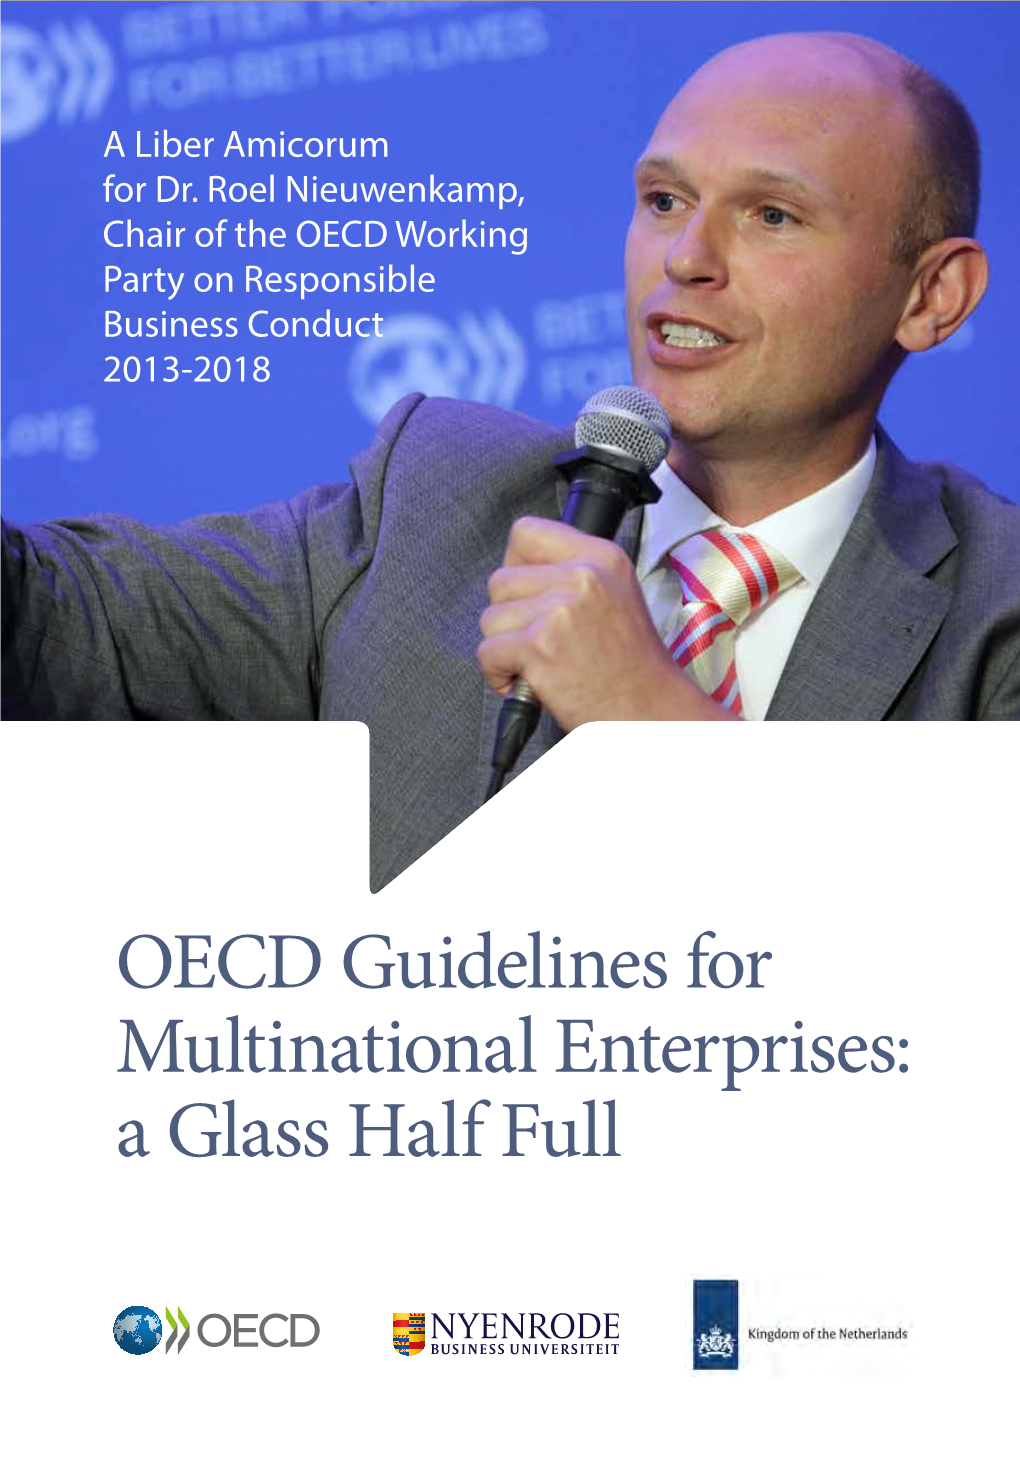 OECD Guidelines for Multinational Enterprises: a Glass Half Full